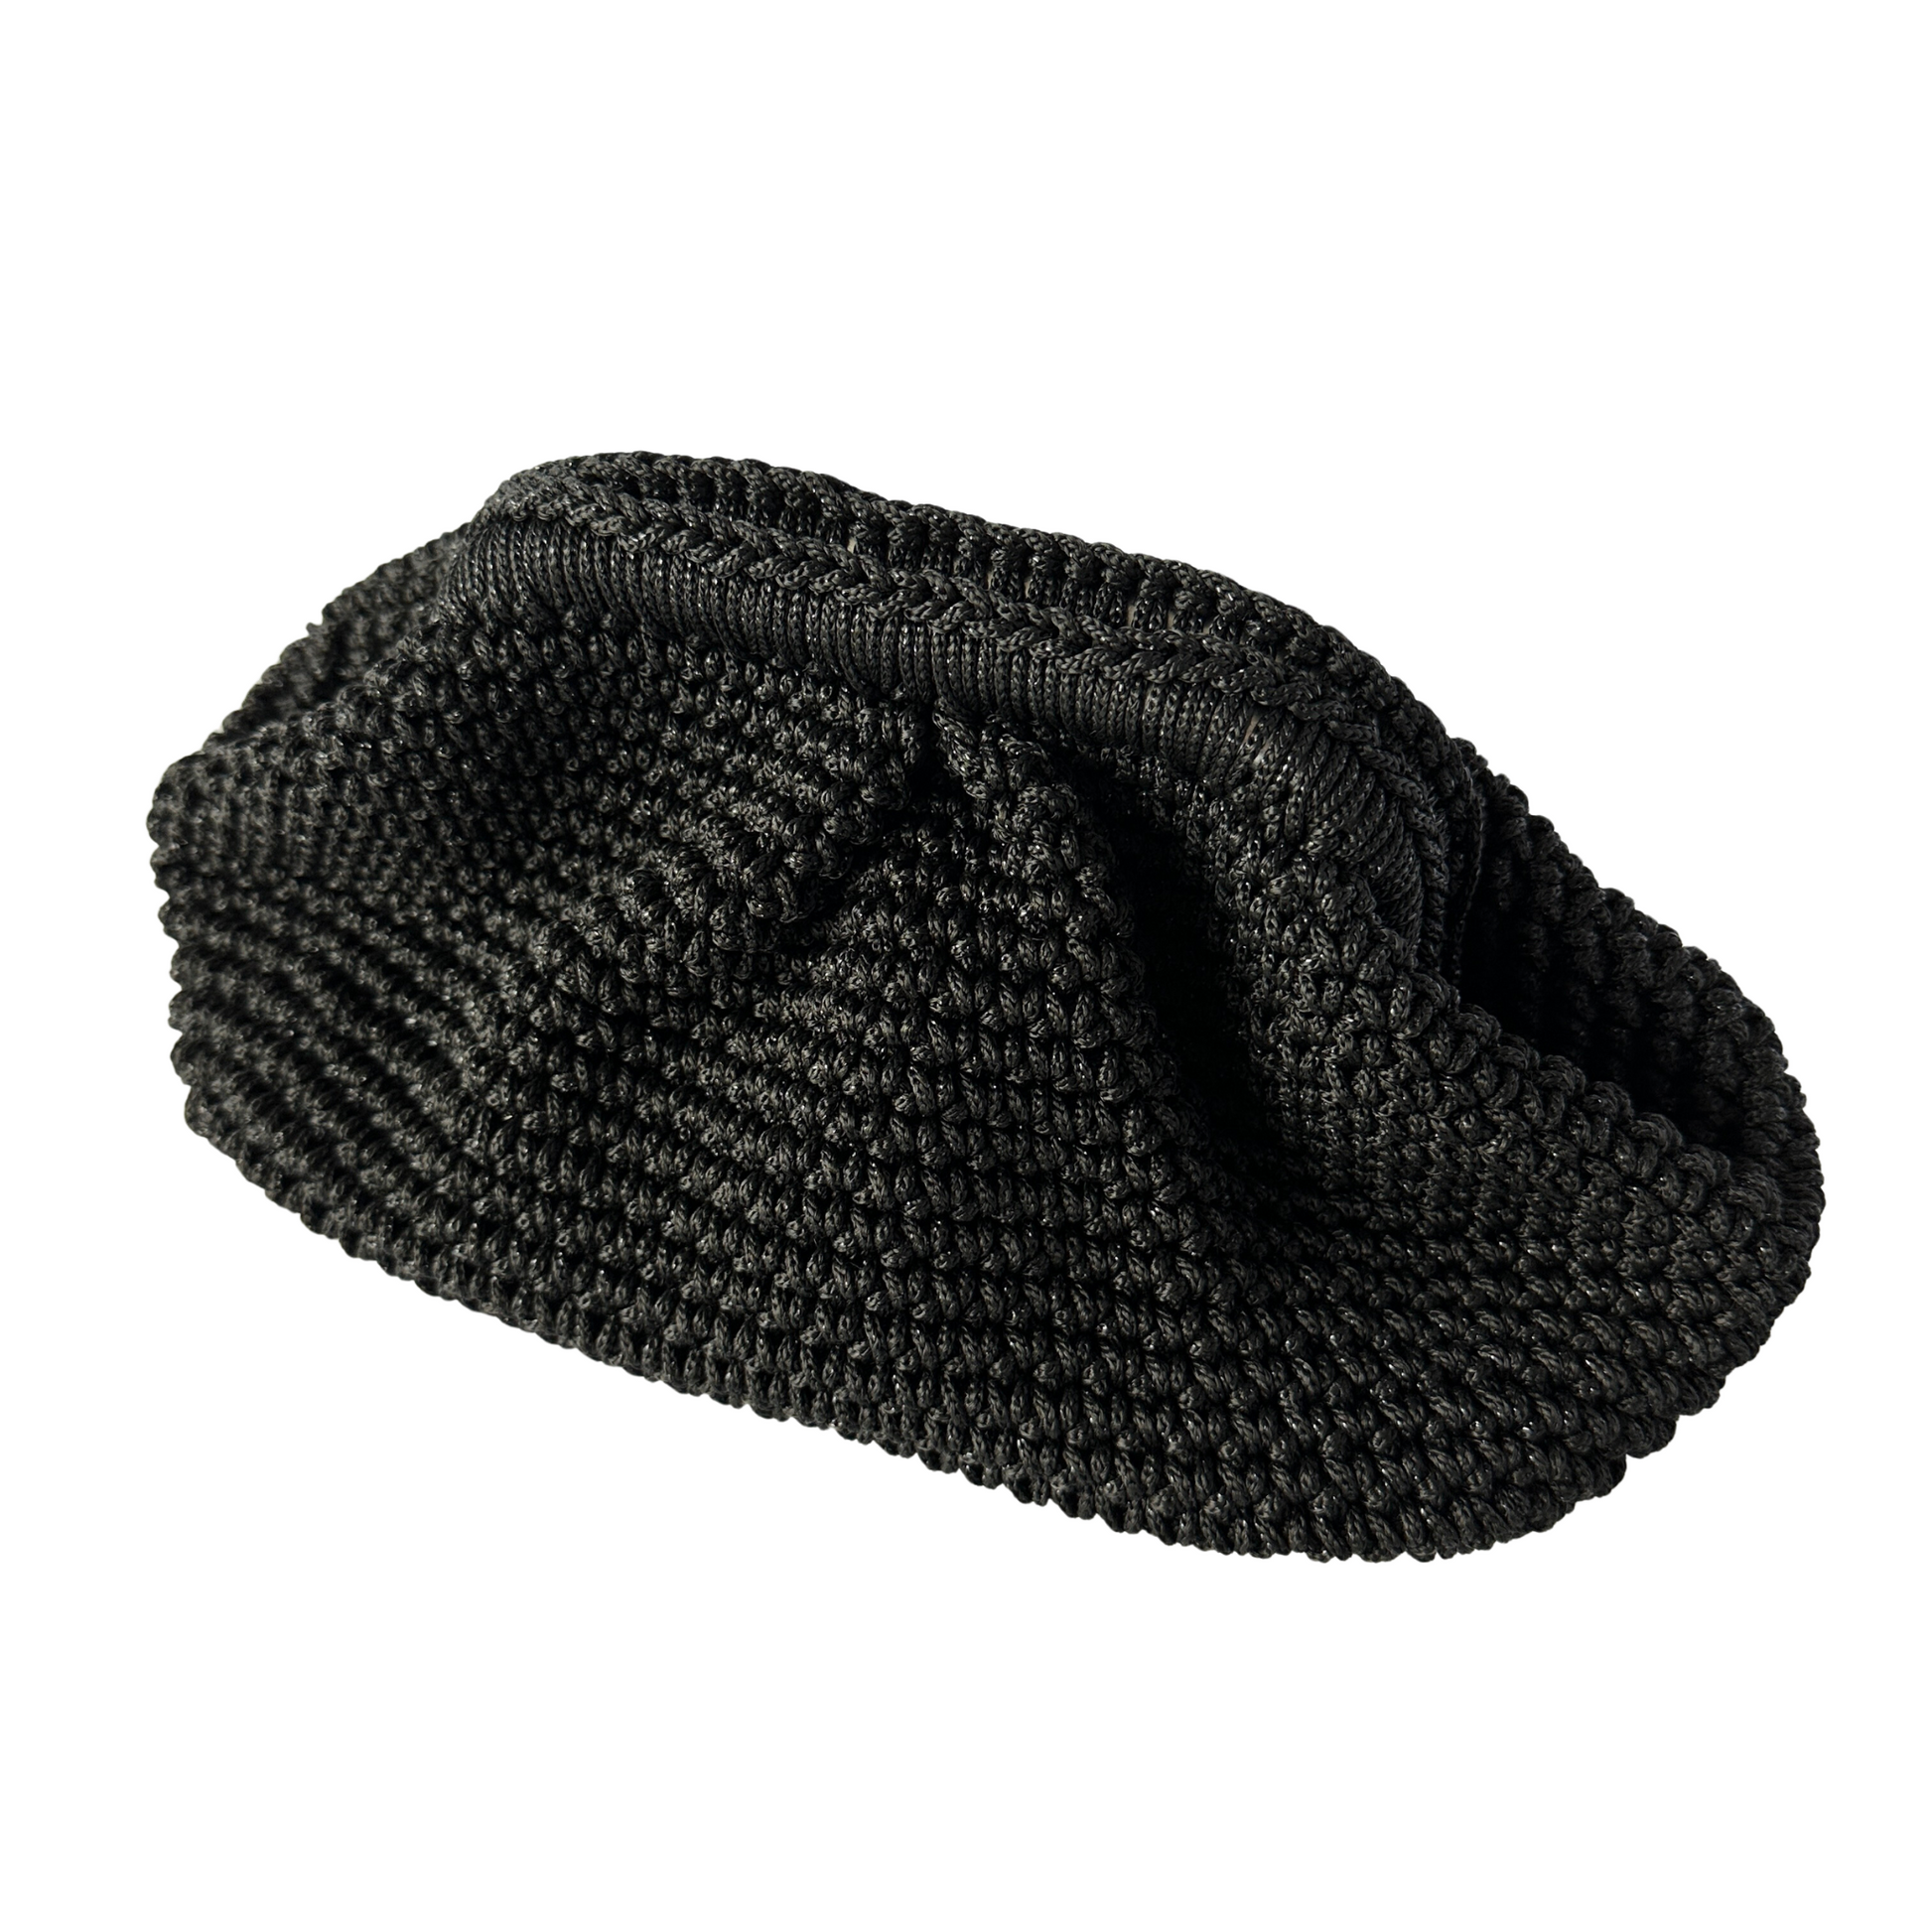 Luxury Crochet Purse Bag, Bag